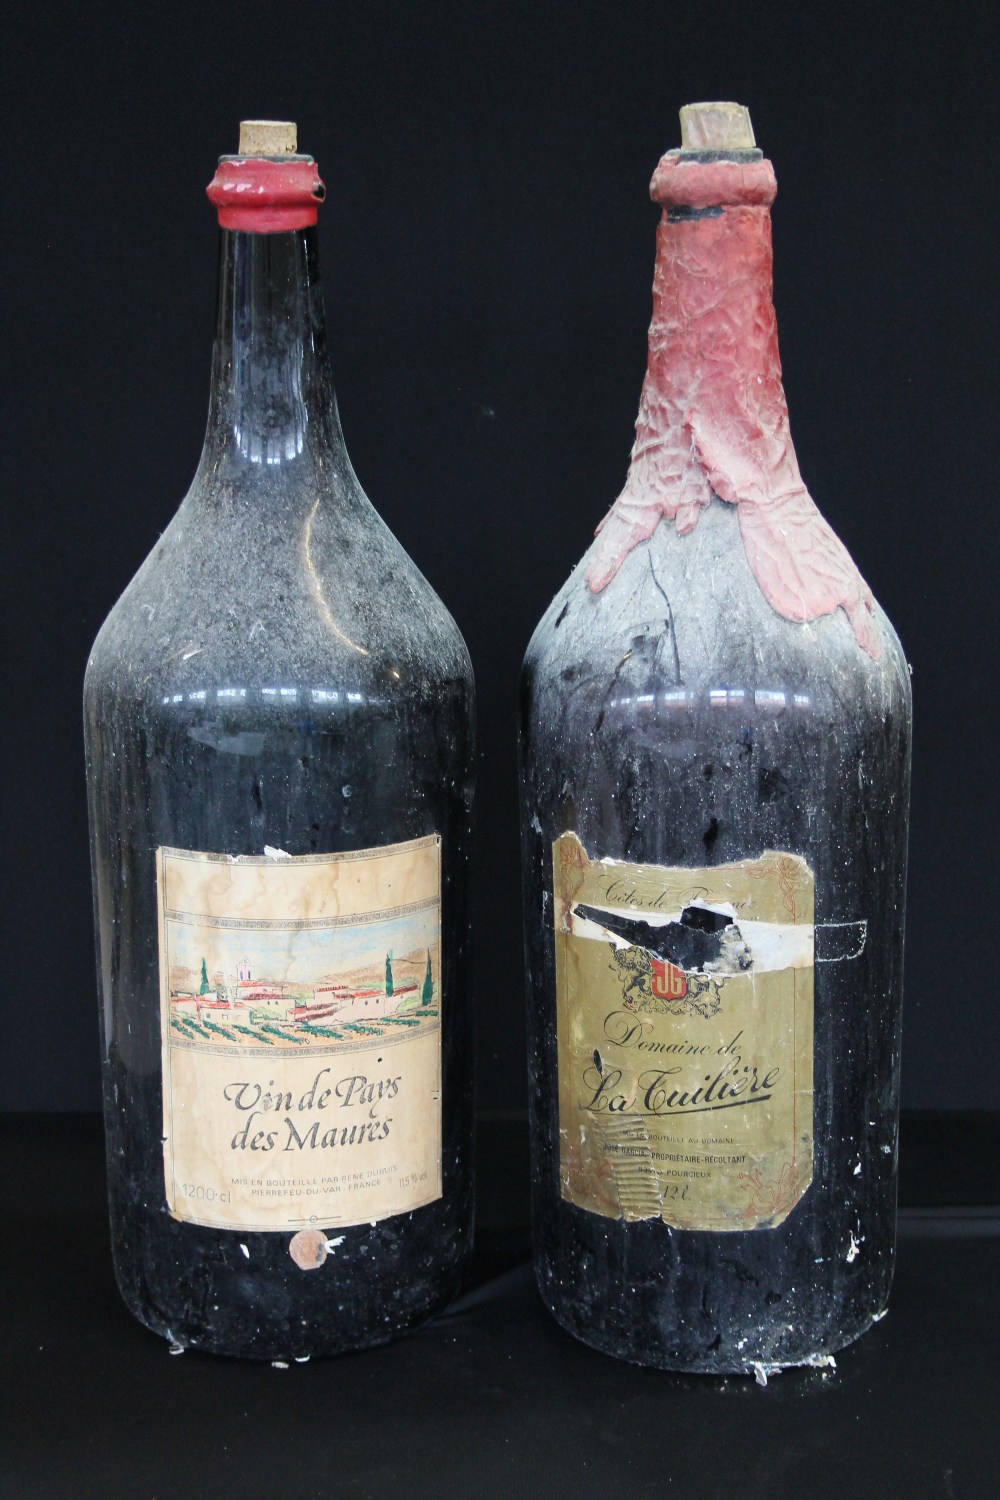 TWO 1200CL BOTTLES - two empty vintage French 1200cl wine bottles, one brown Domaine de La Cuiliere,